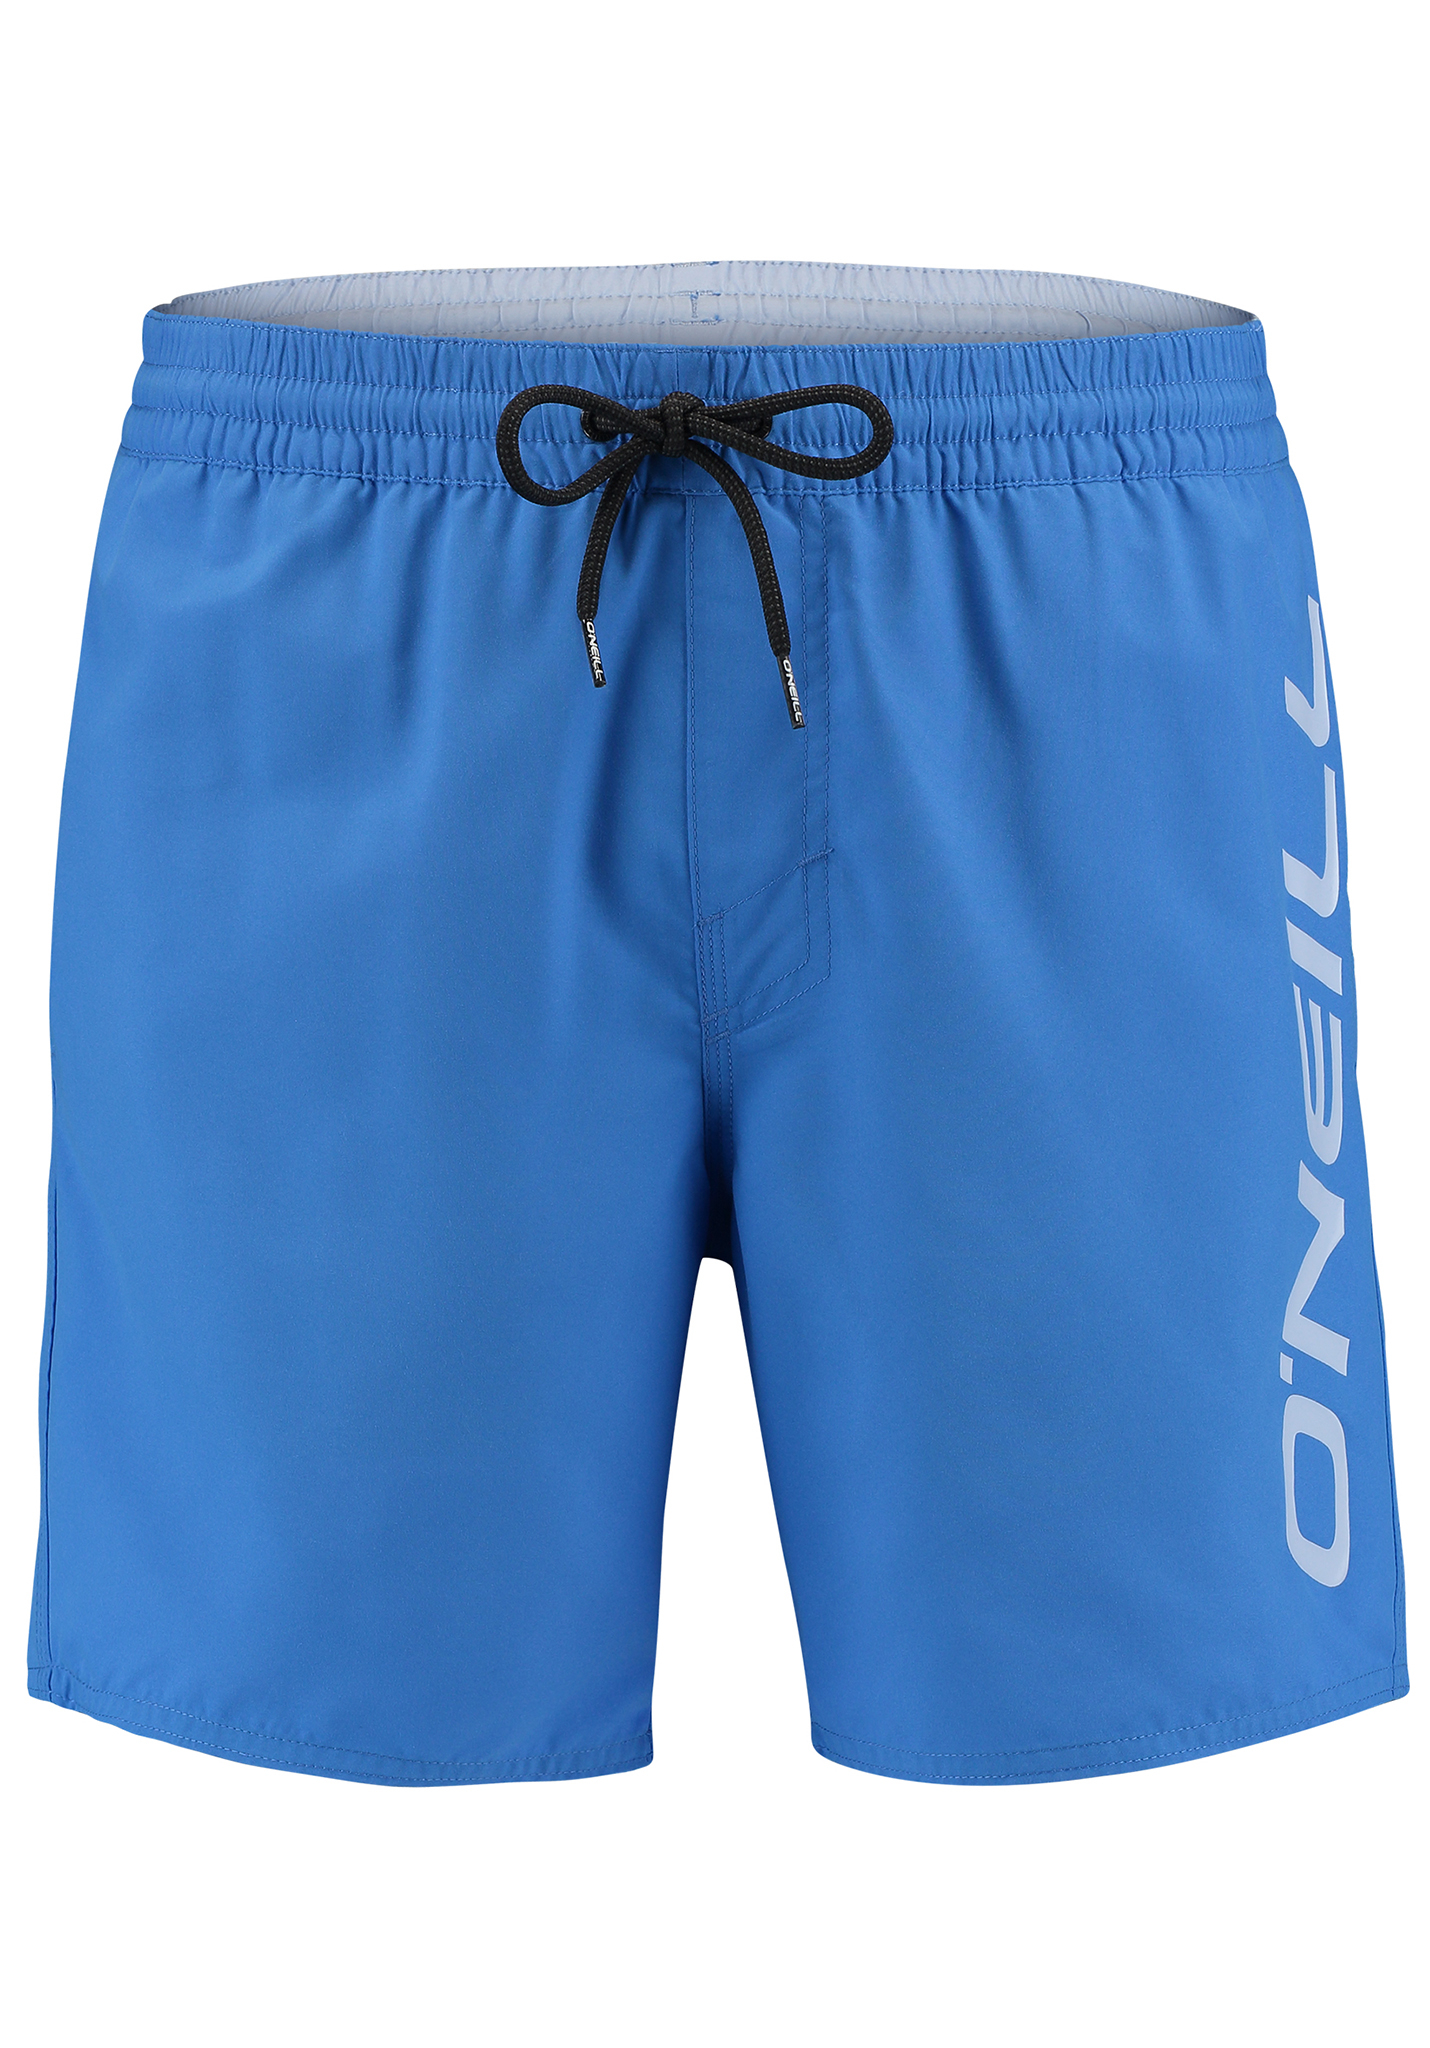 O'Neill Cali Boardshorts blue XXL